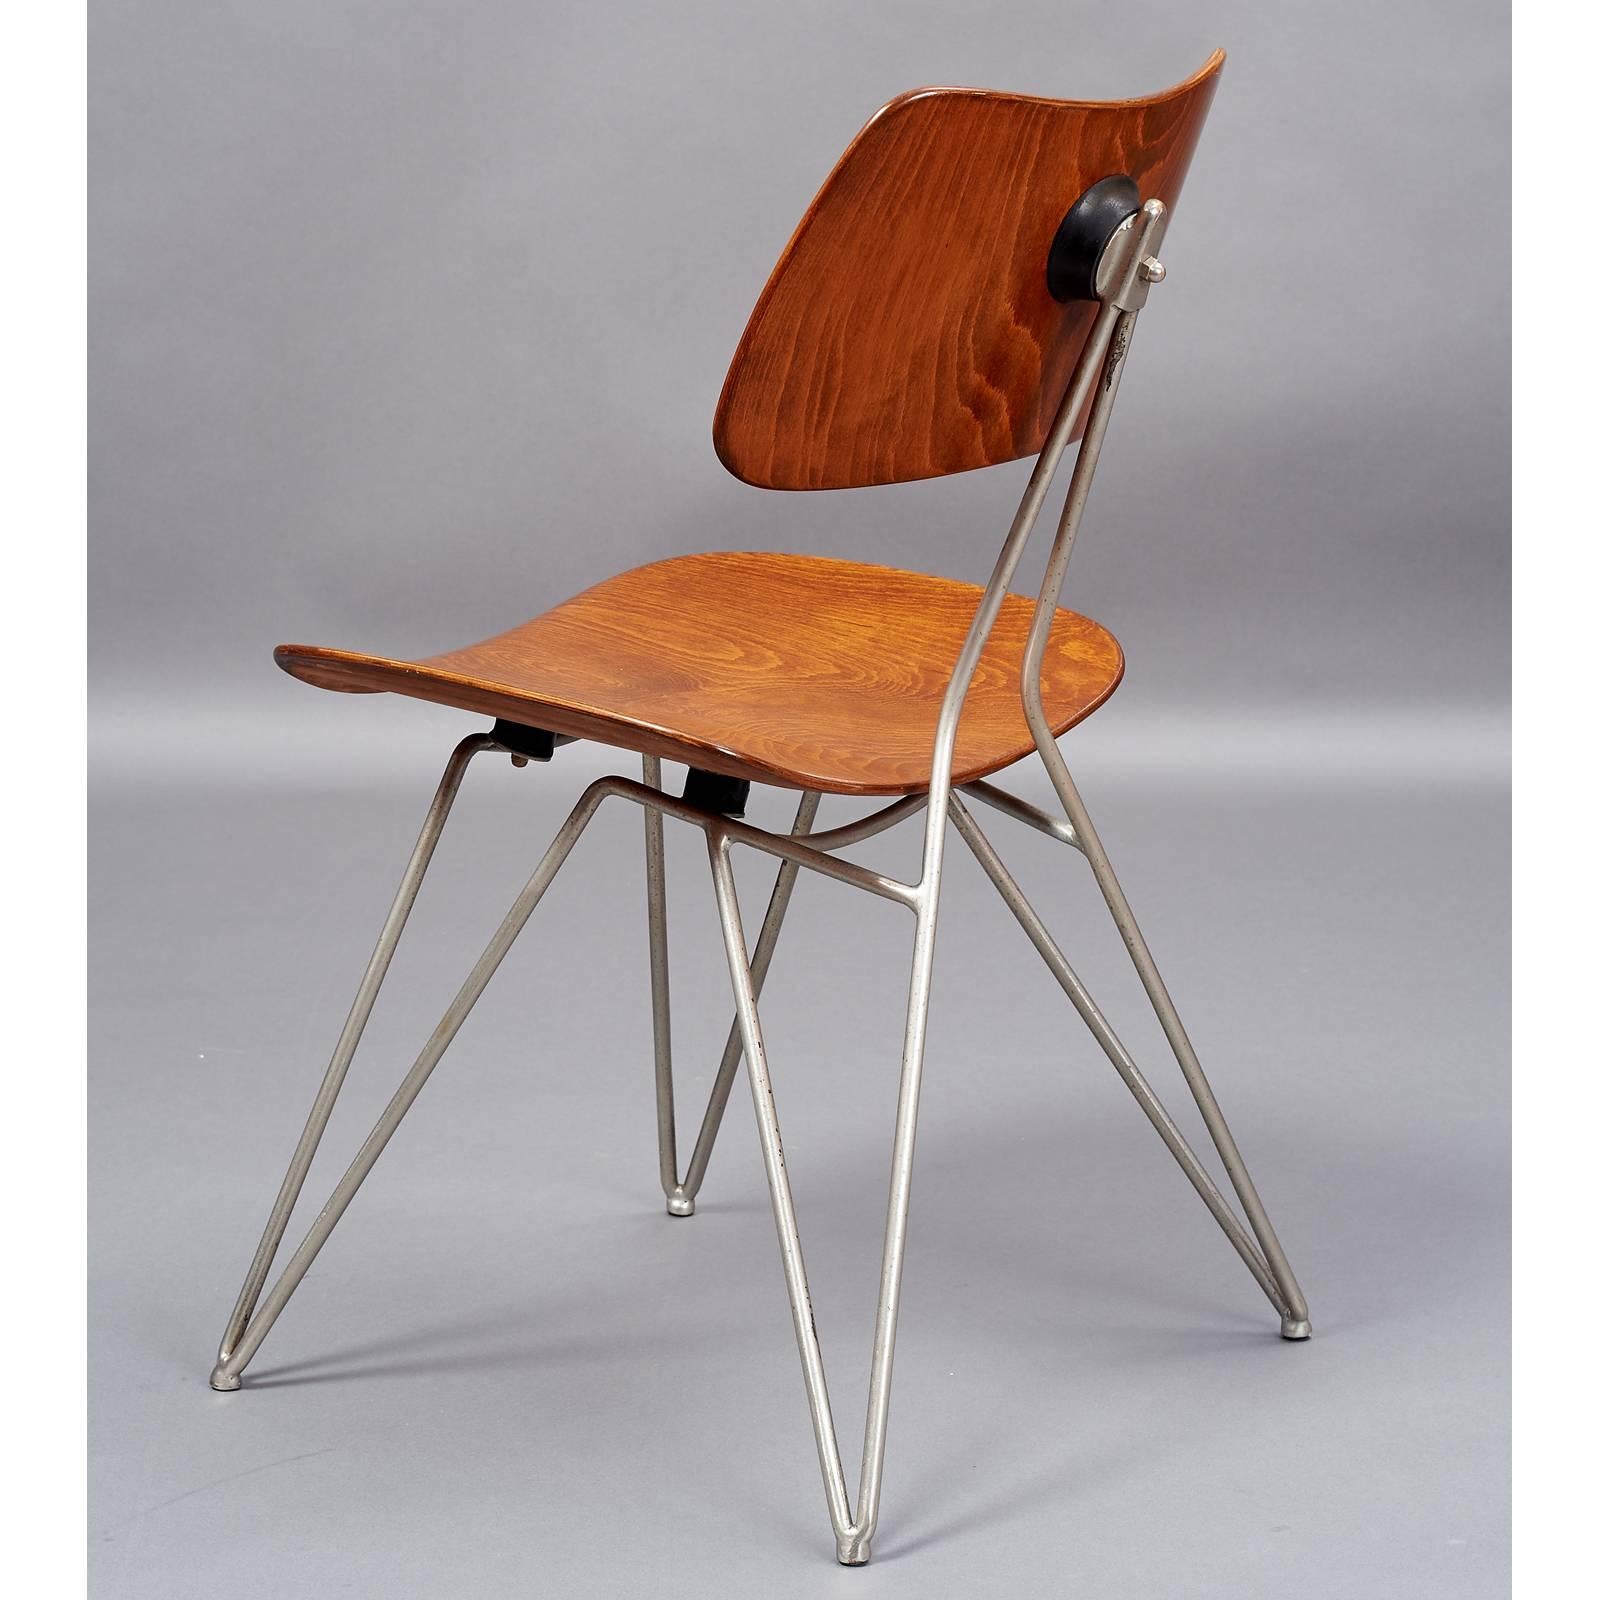 Italian Sculptural Chair by Gastone Rinaldi with Gio Ponti, circa 1951